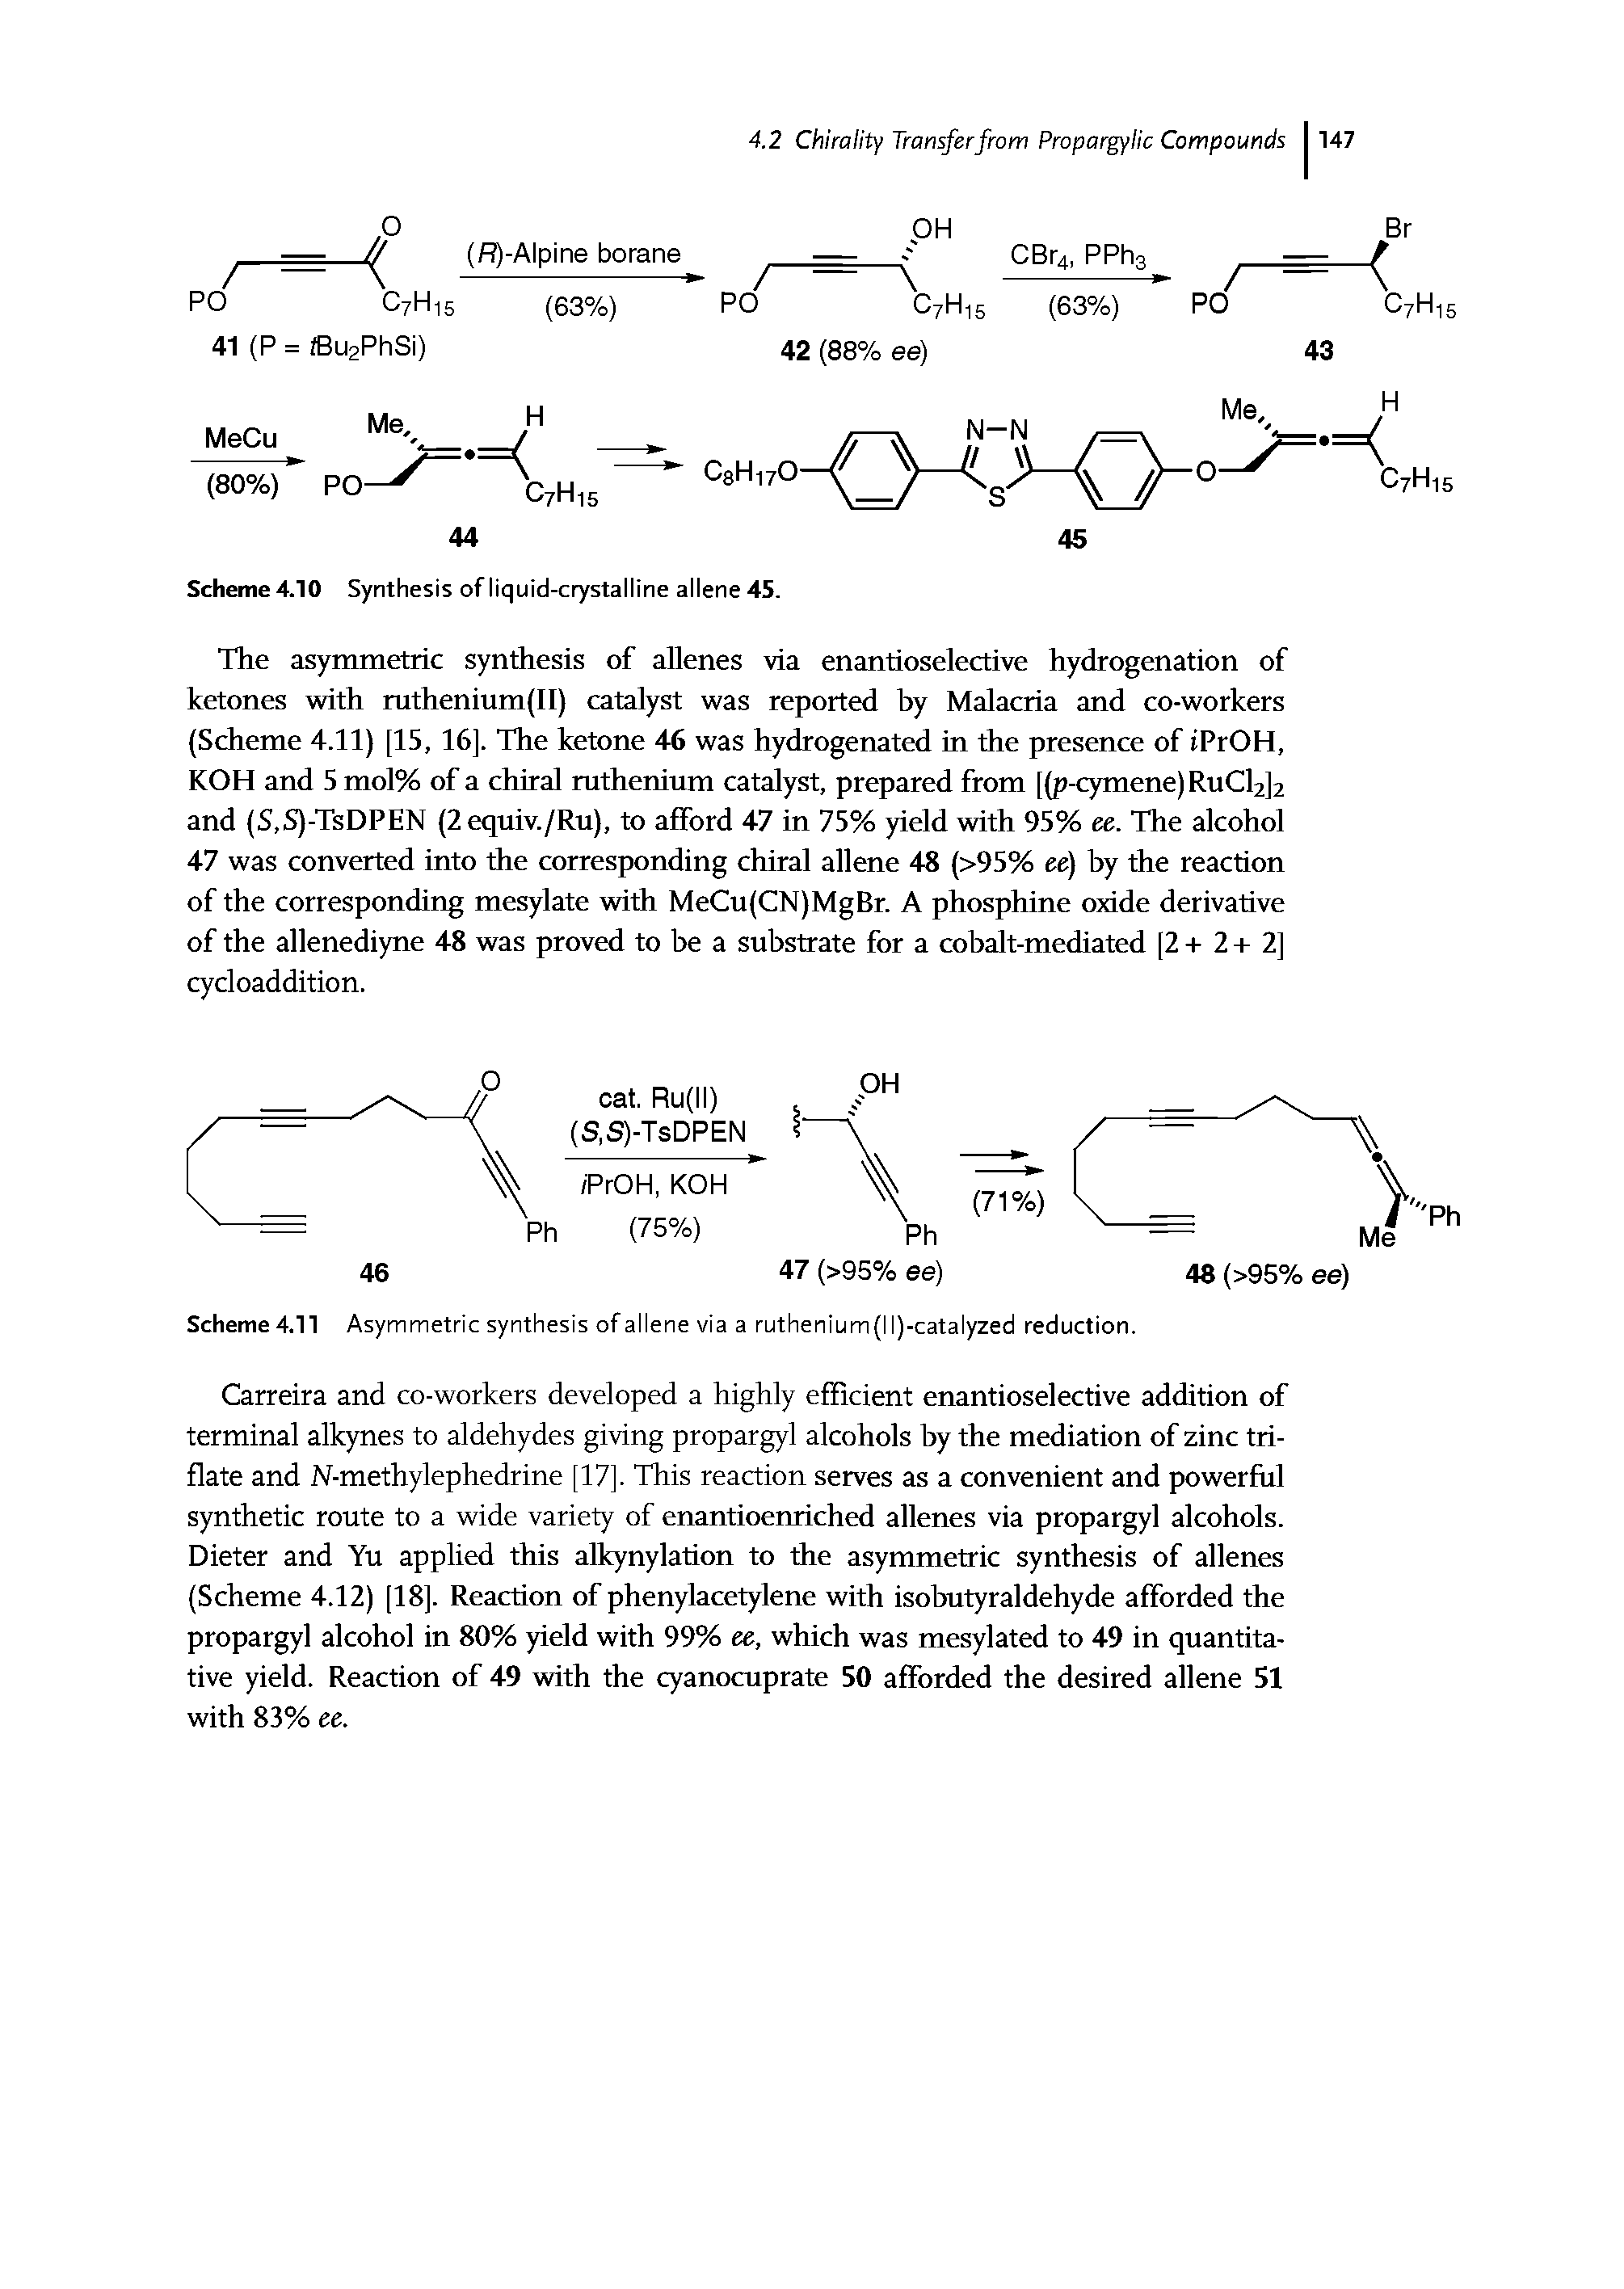 Scheme 4.11 Asymmetric synthesis of allene via a ruthenium (I l)-catalyzed reduction.